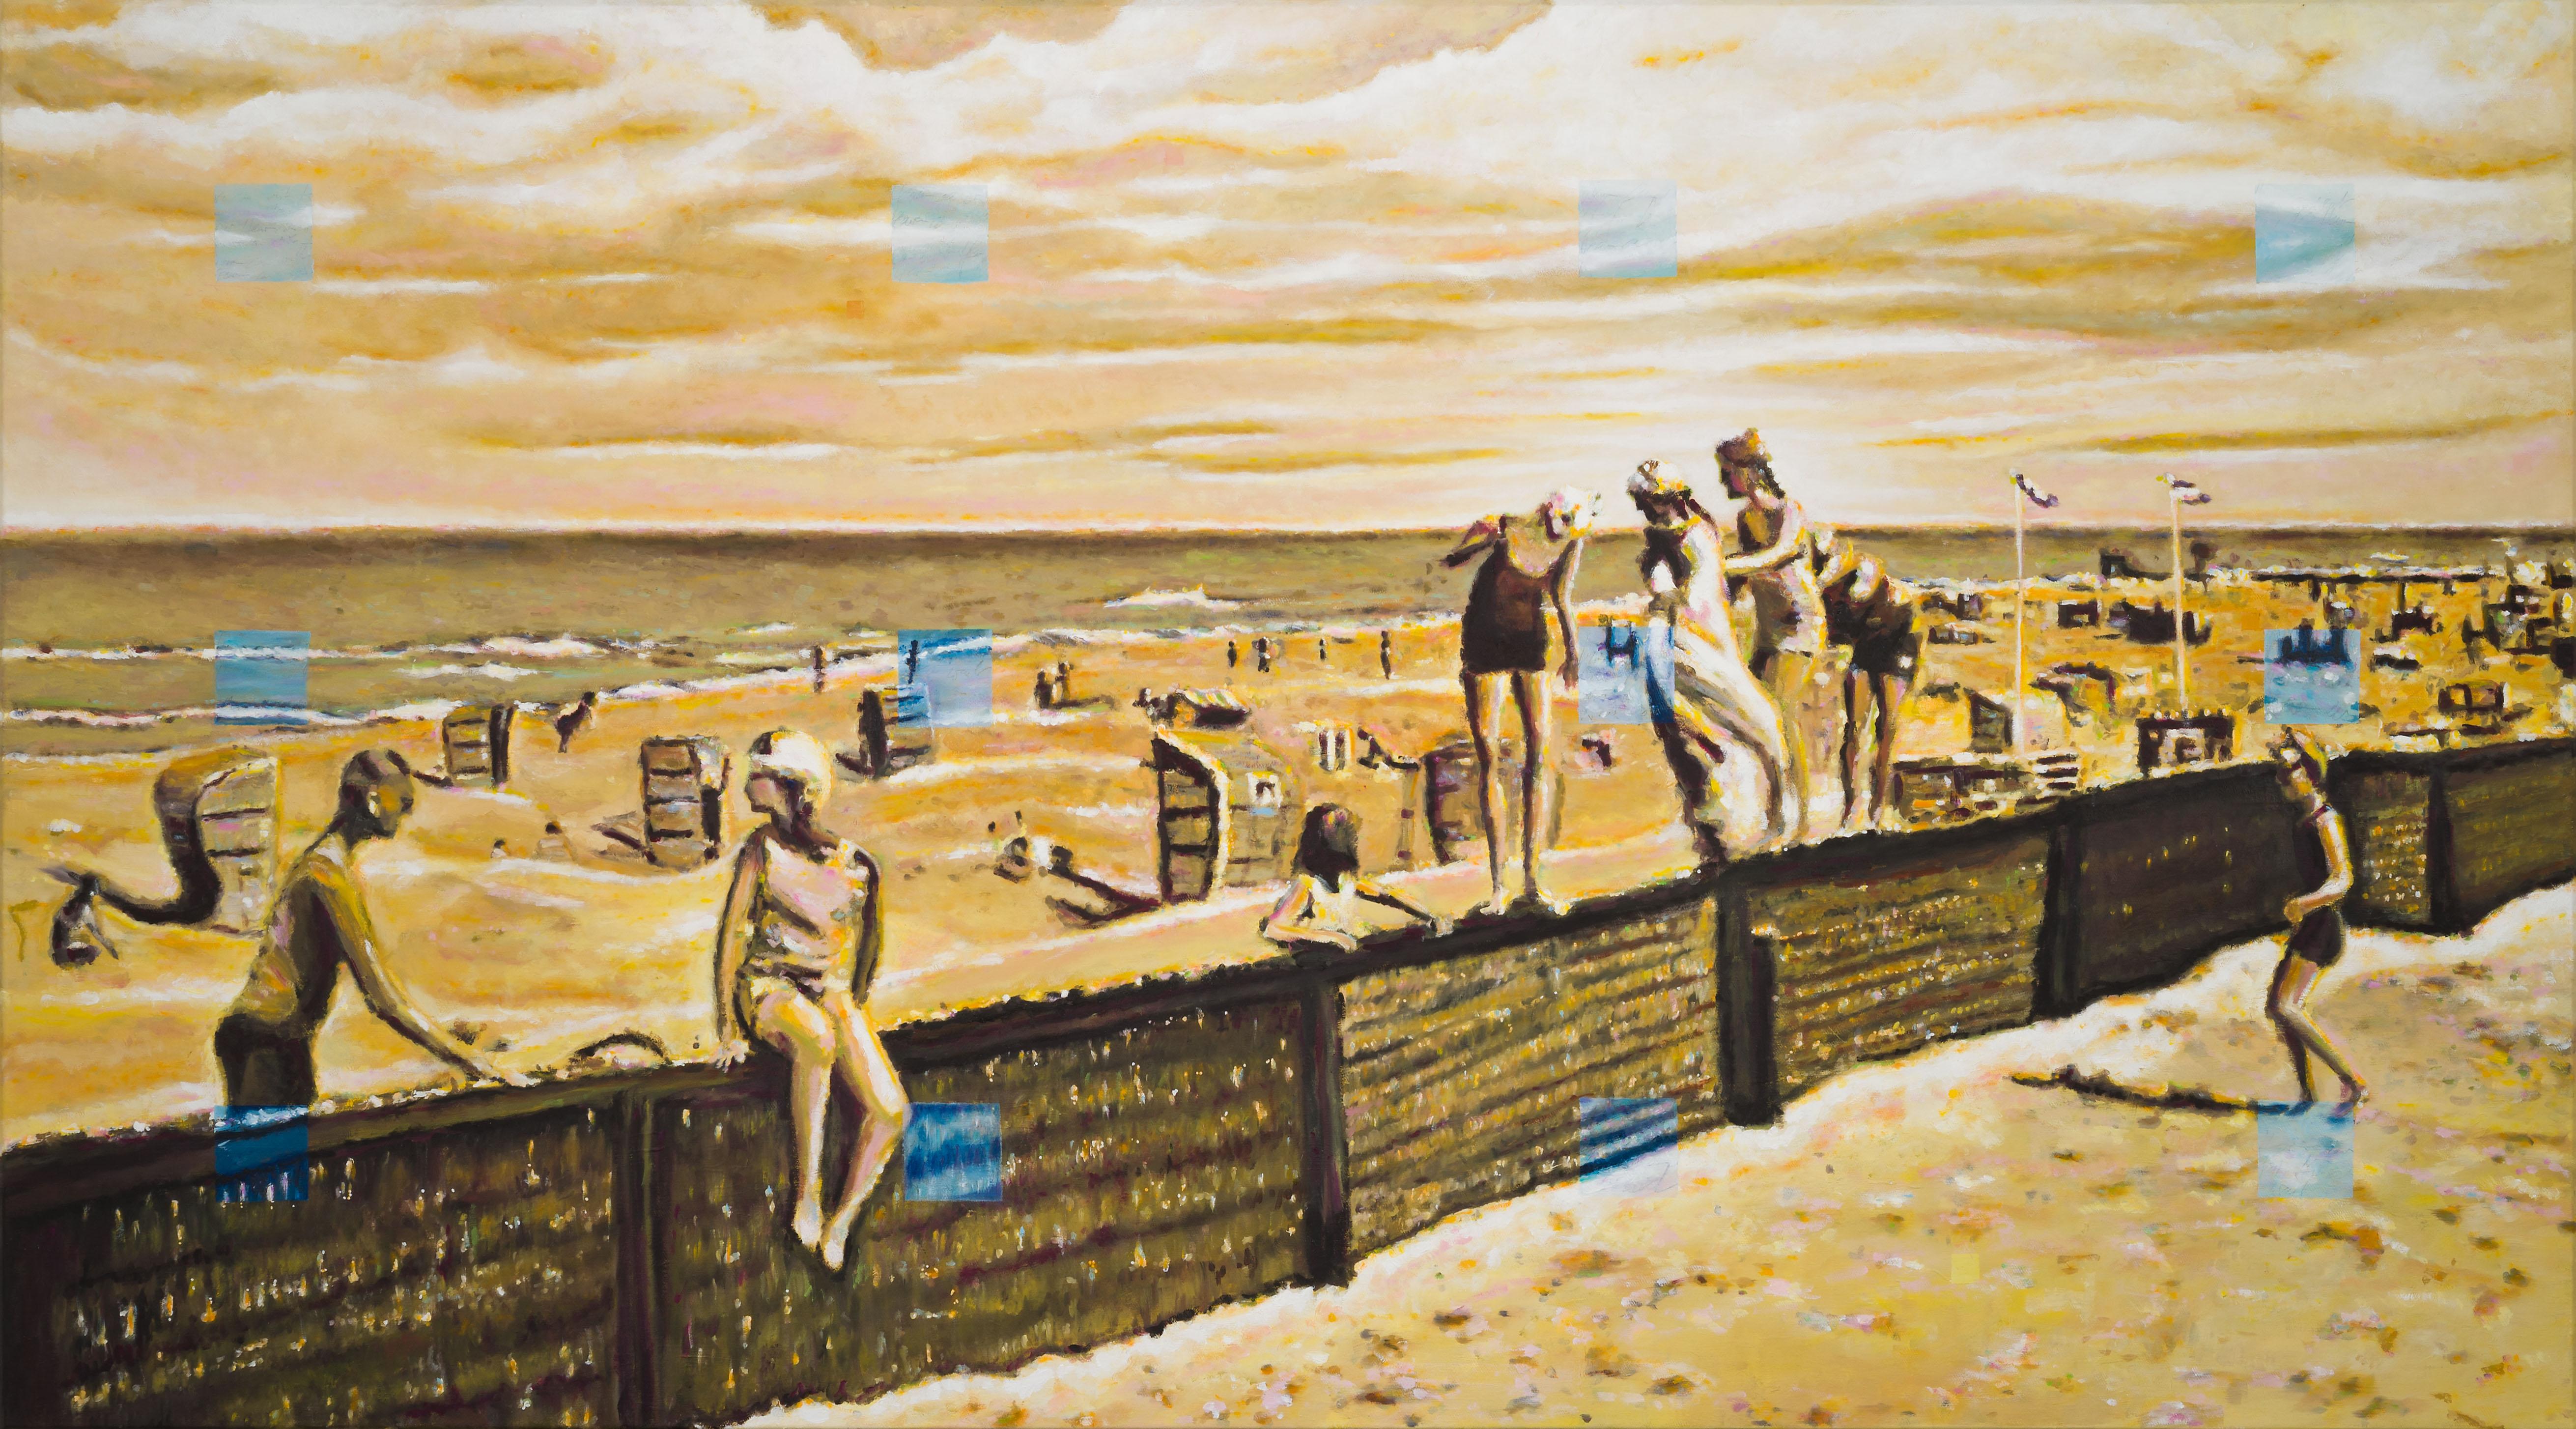 Michael Pröpper Figurative Painting - Heaven Can Wait- contemporary dance scene on beach figurative landscape painting